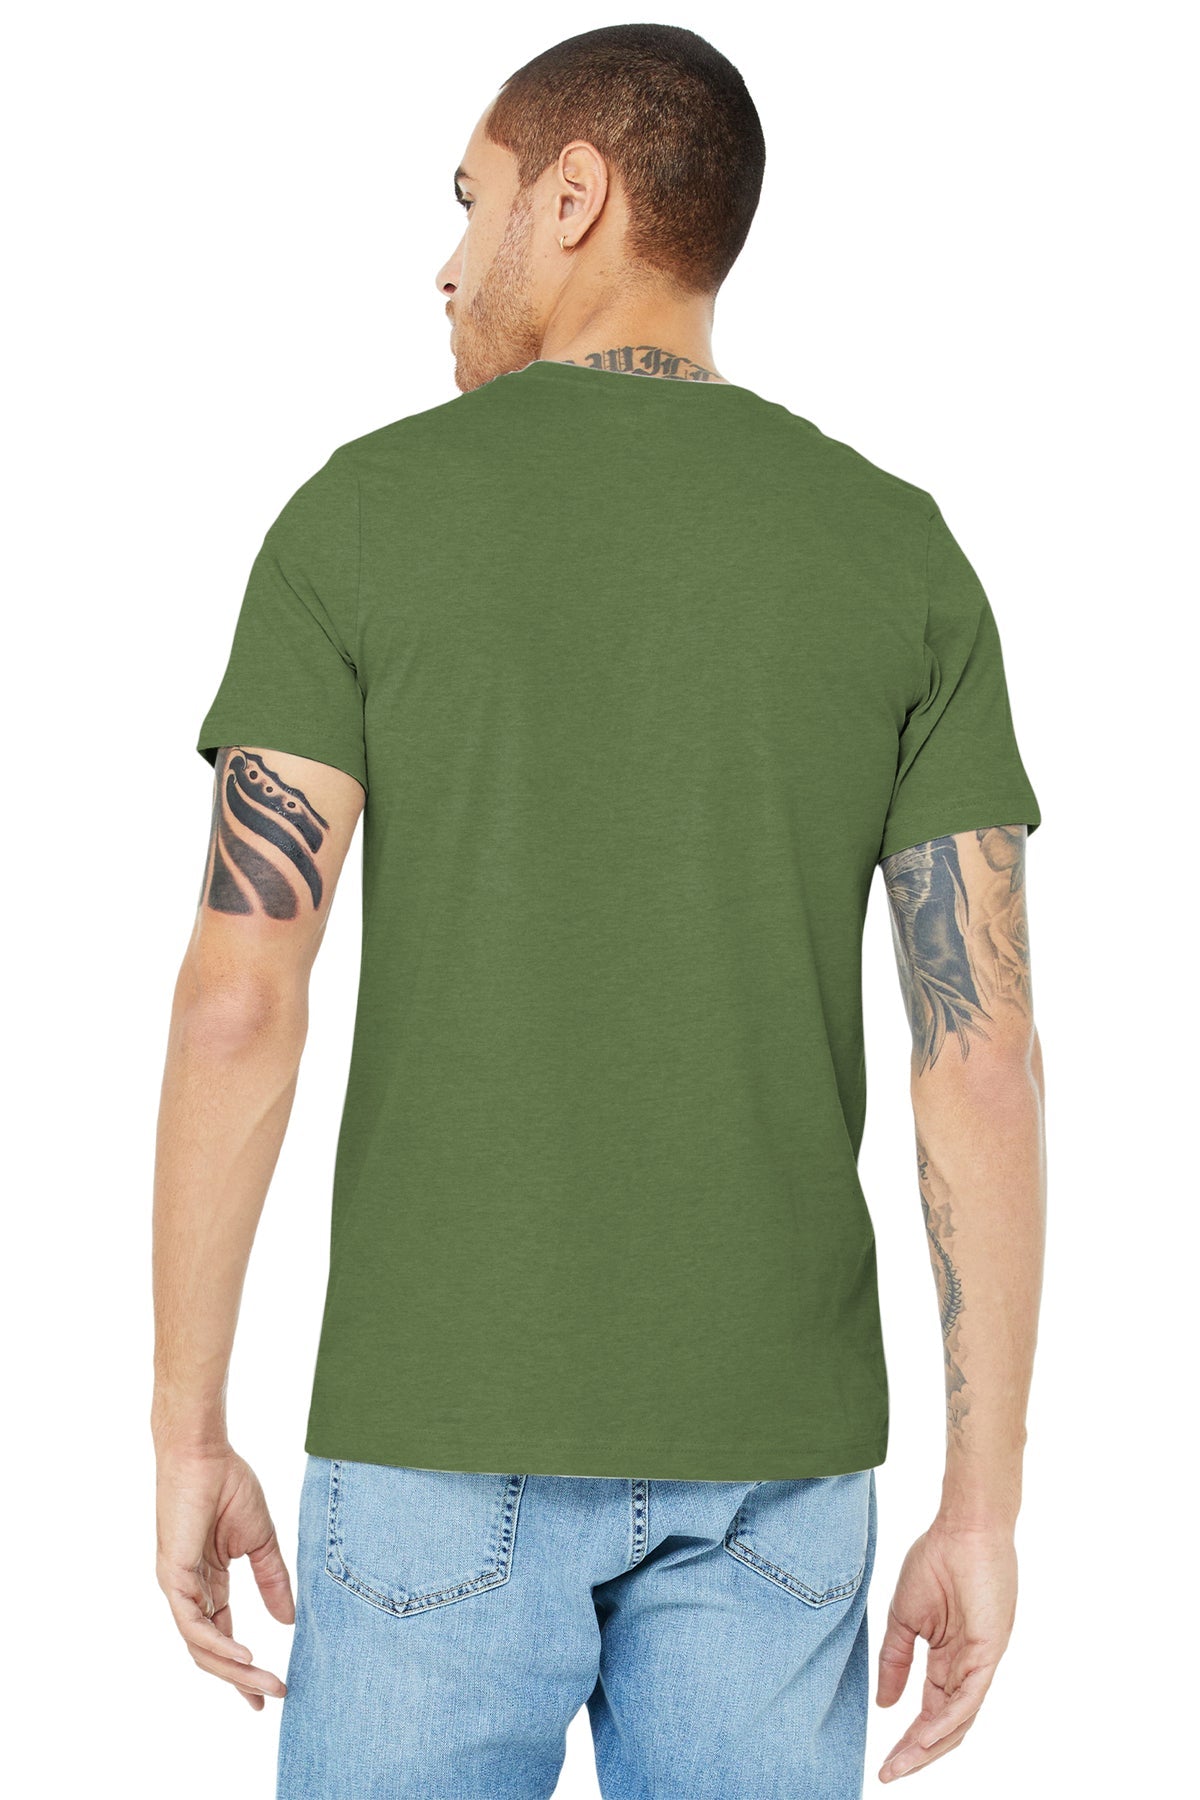 bella + canvas unisex jersey short sleeve t-shirt 3001c heather green